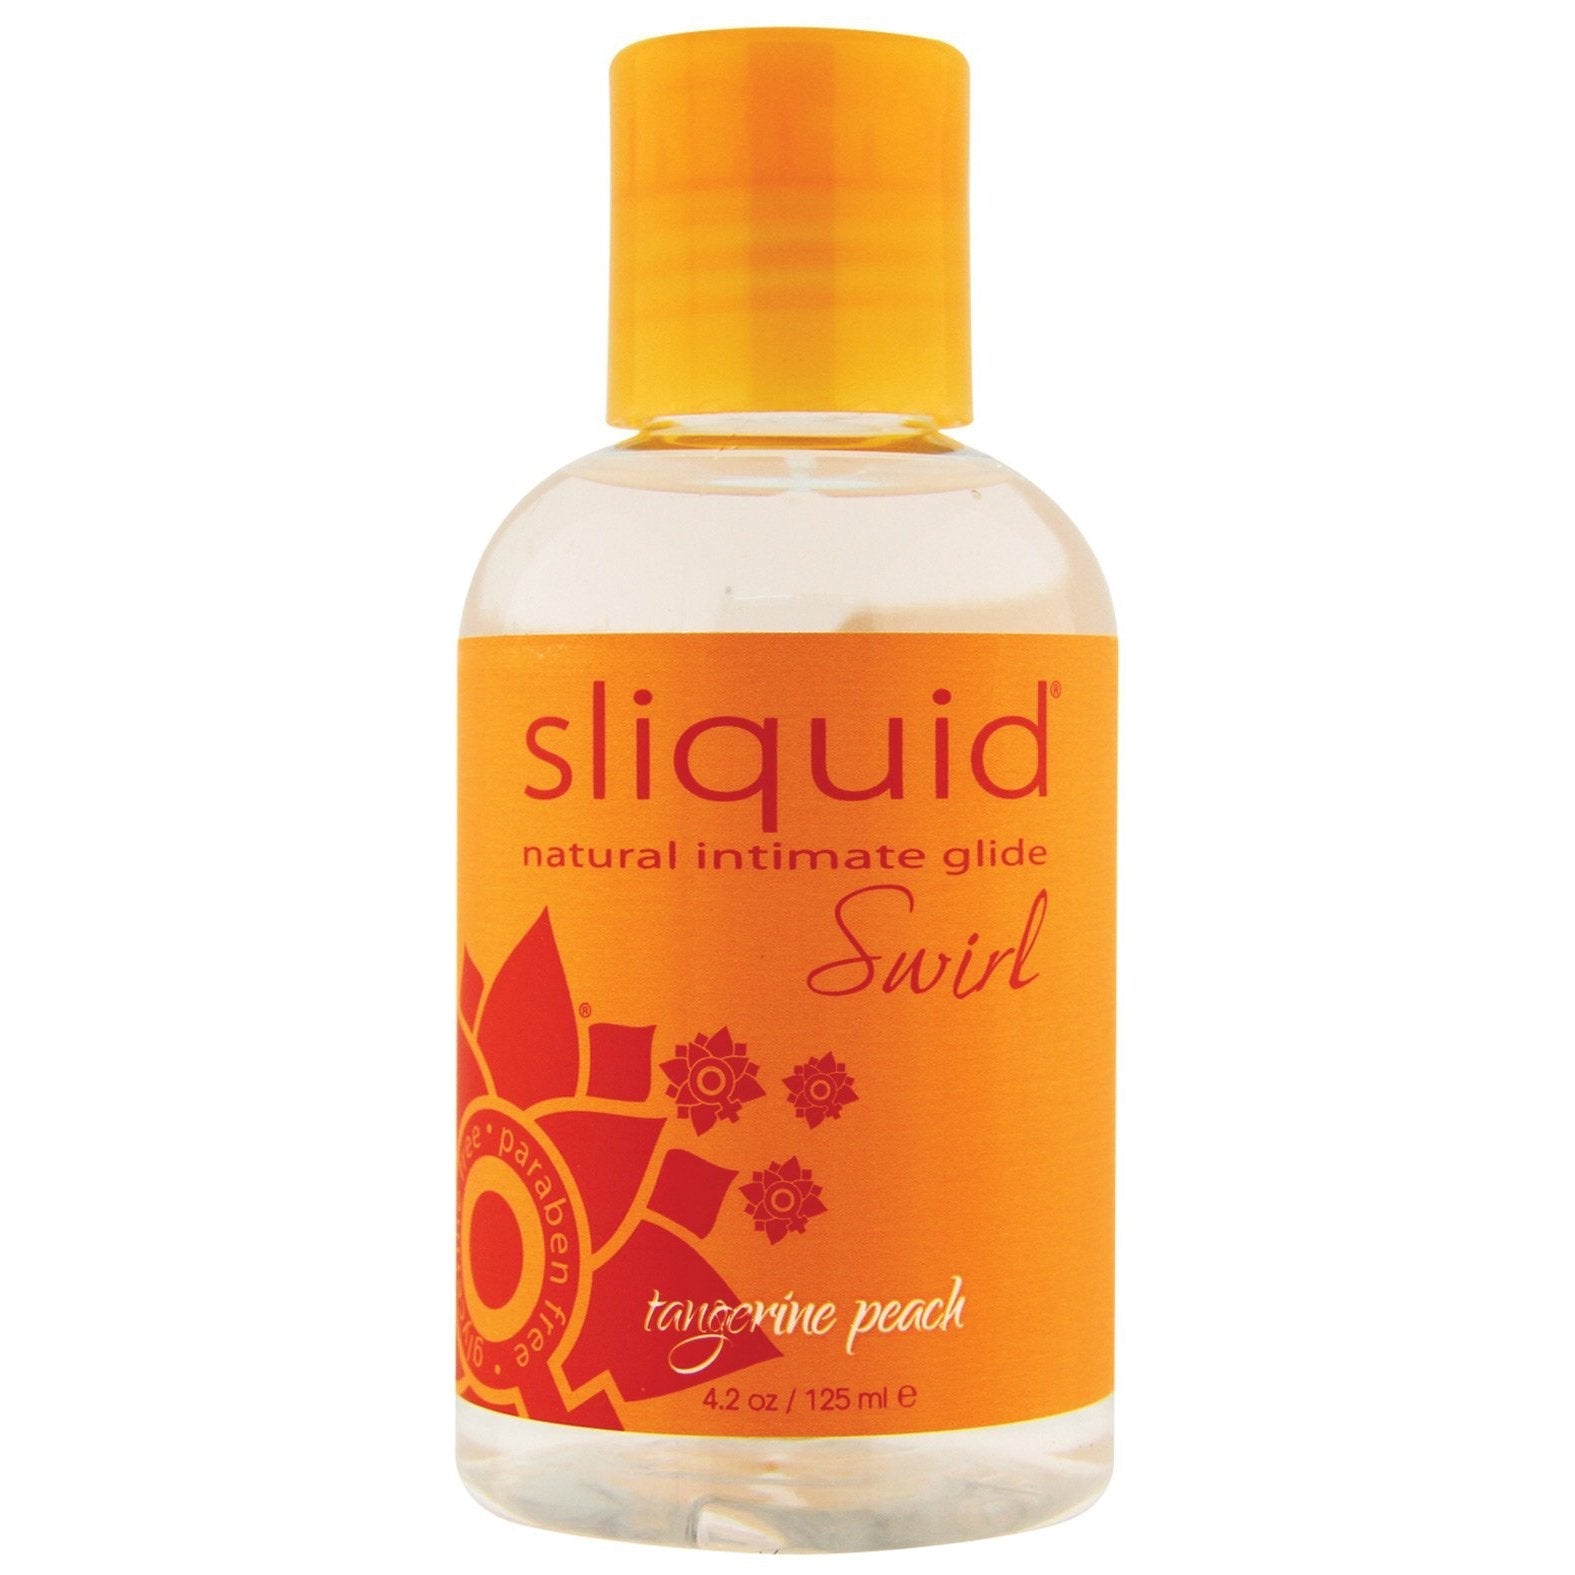 Sliquid Naturals Swirl Lubricant - 4.2 oz